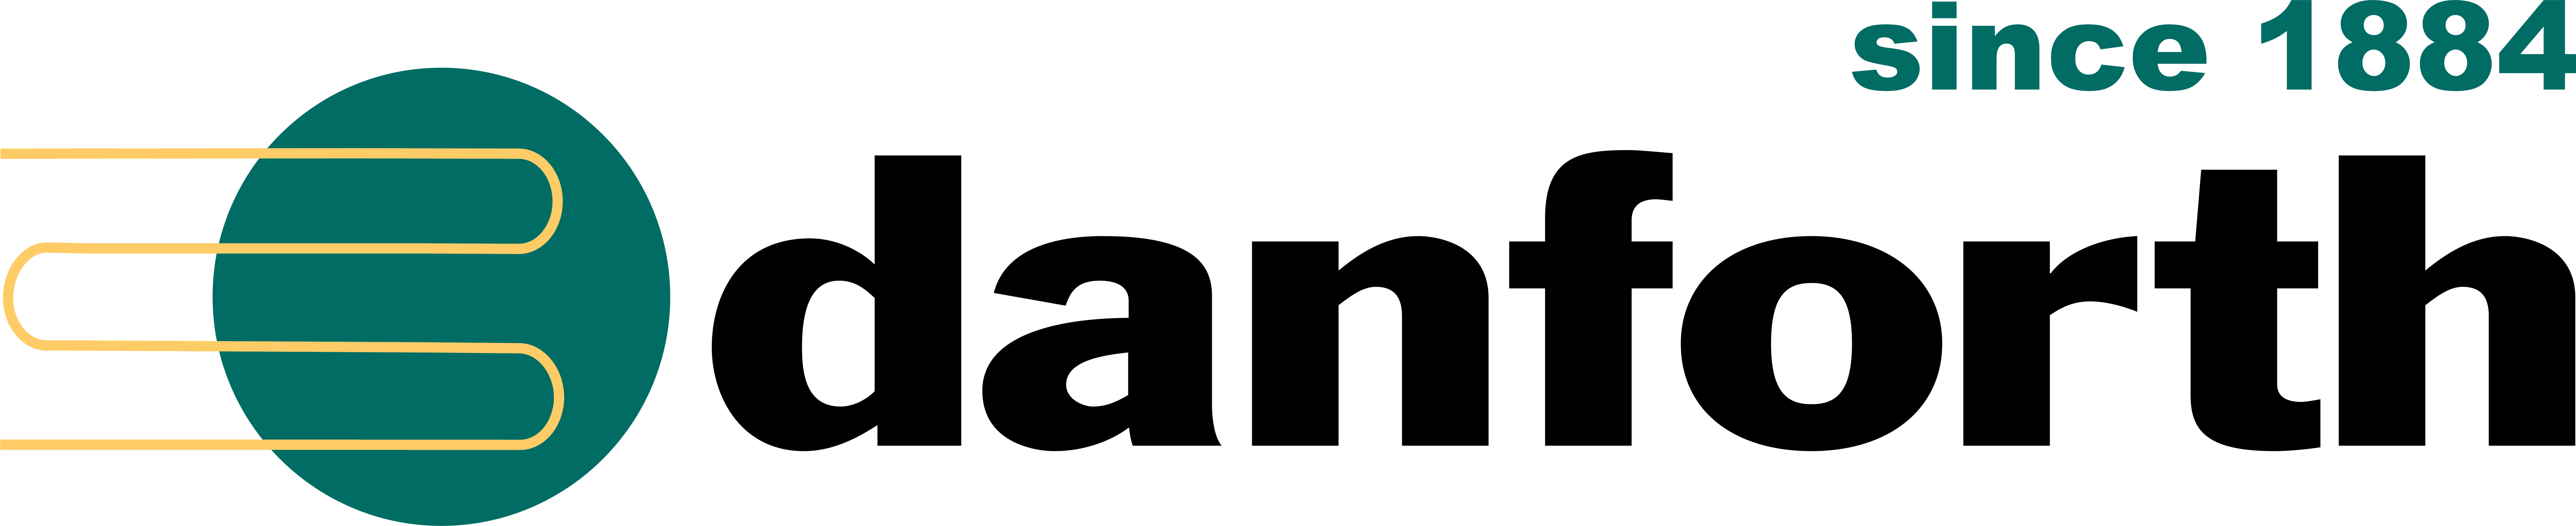 Danforth logo - BTD sponsor